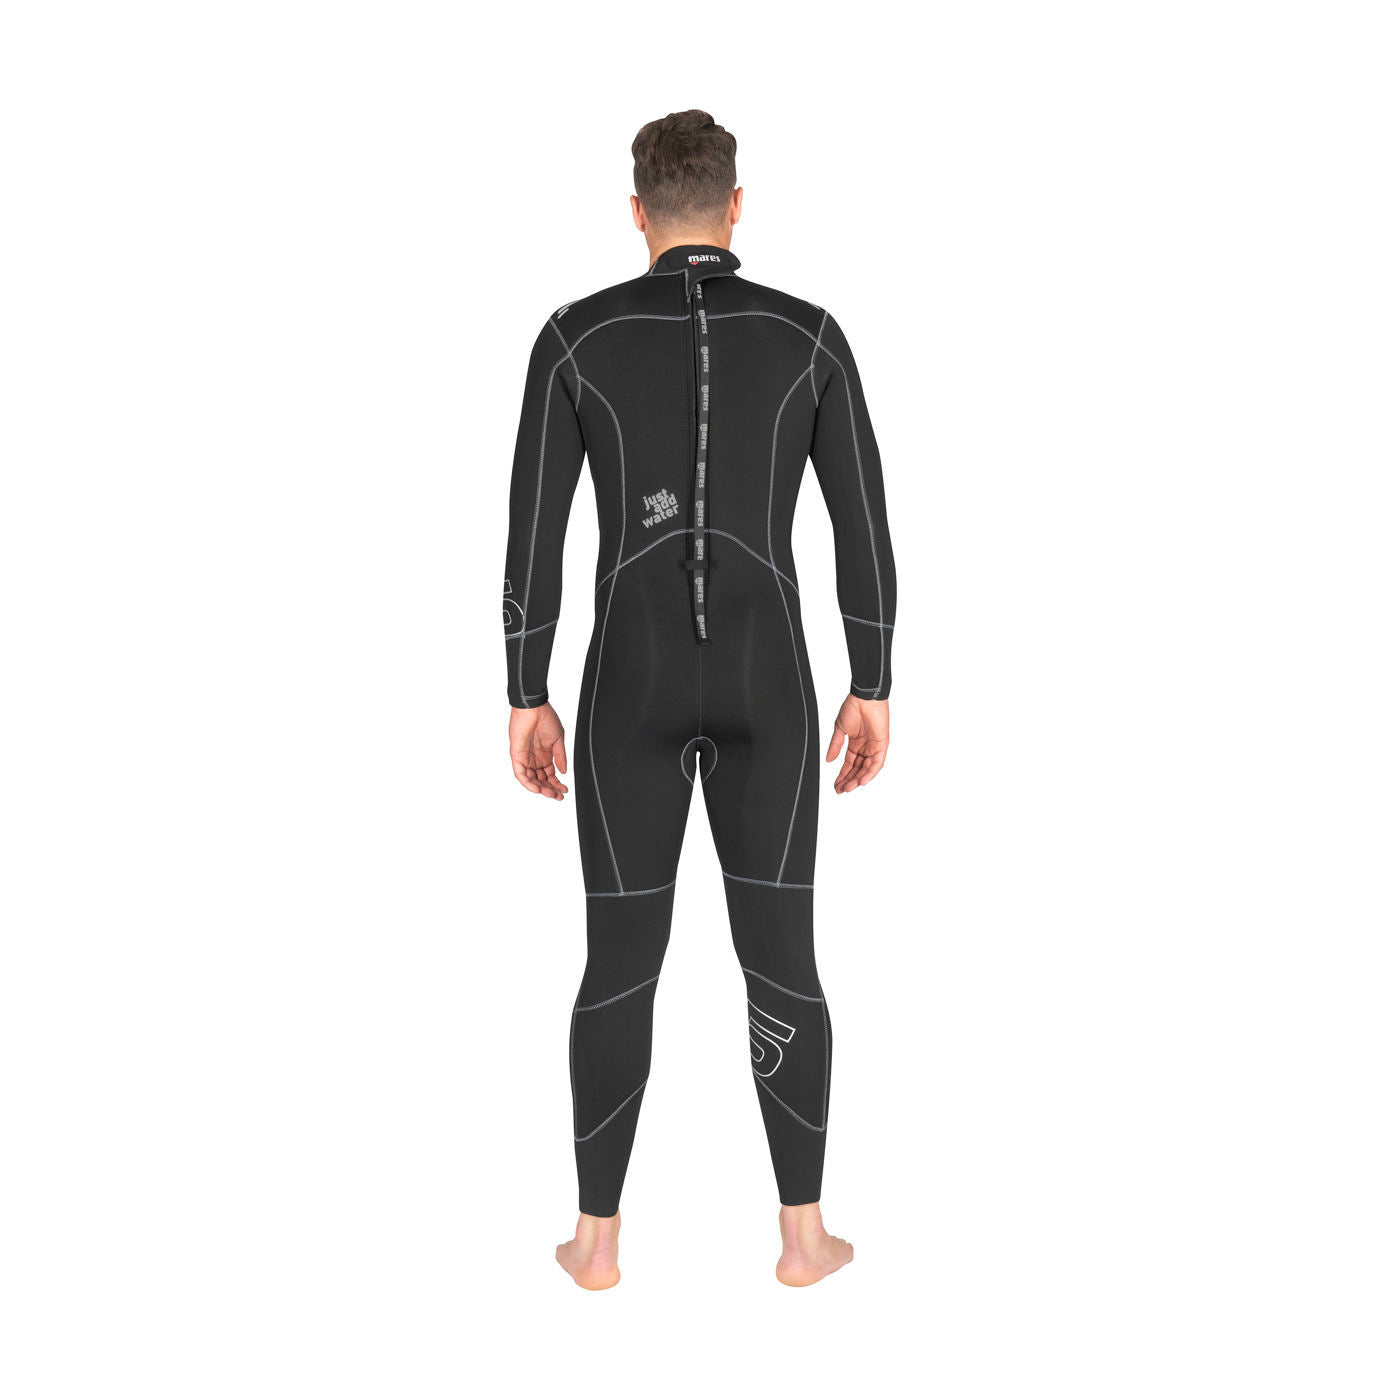 Evolution 5 mm wetsuit